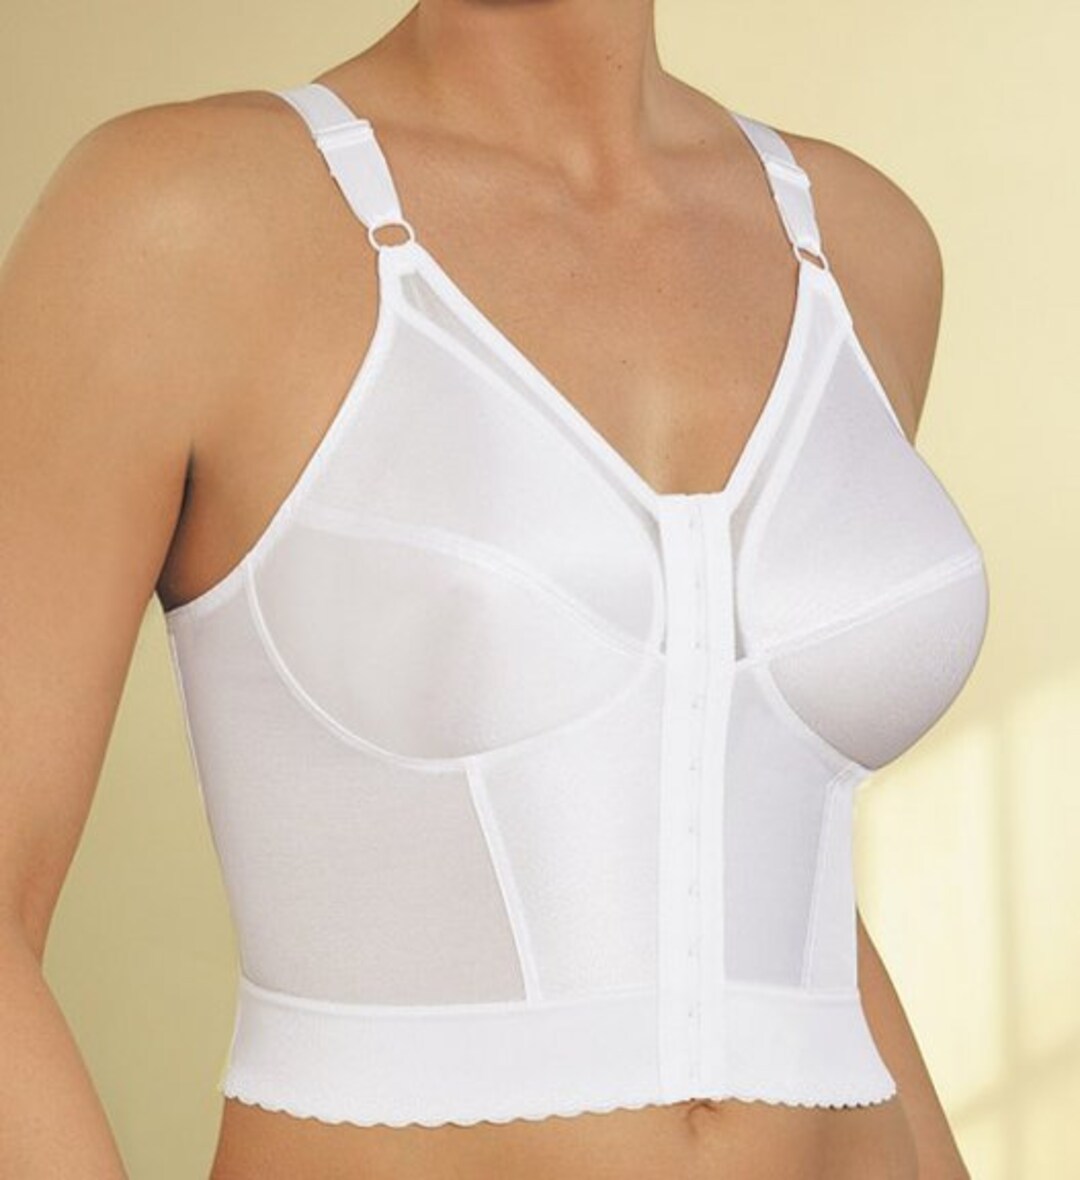 Vintage longline bra - stunning full control bra